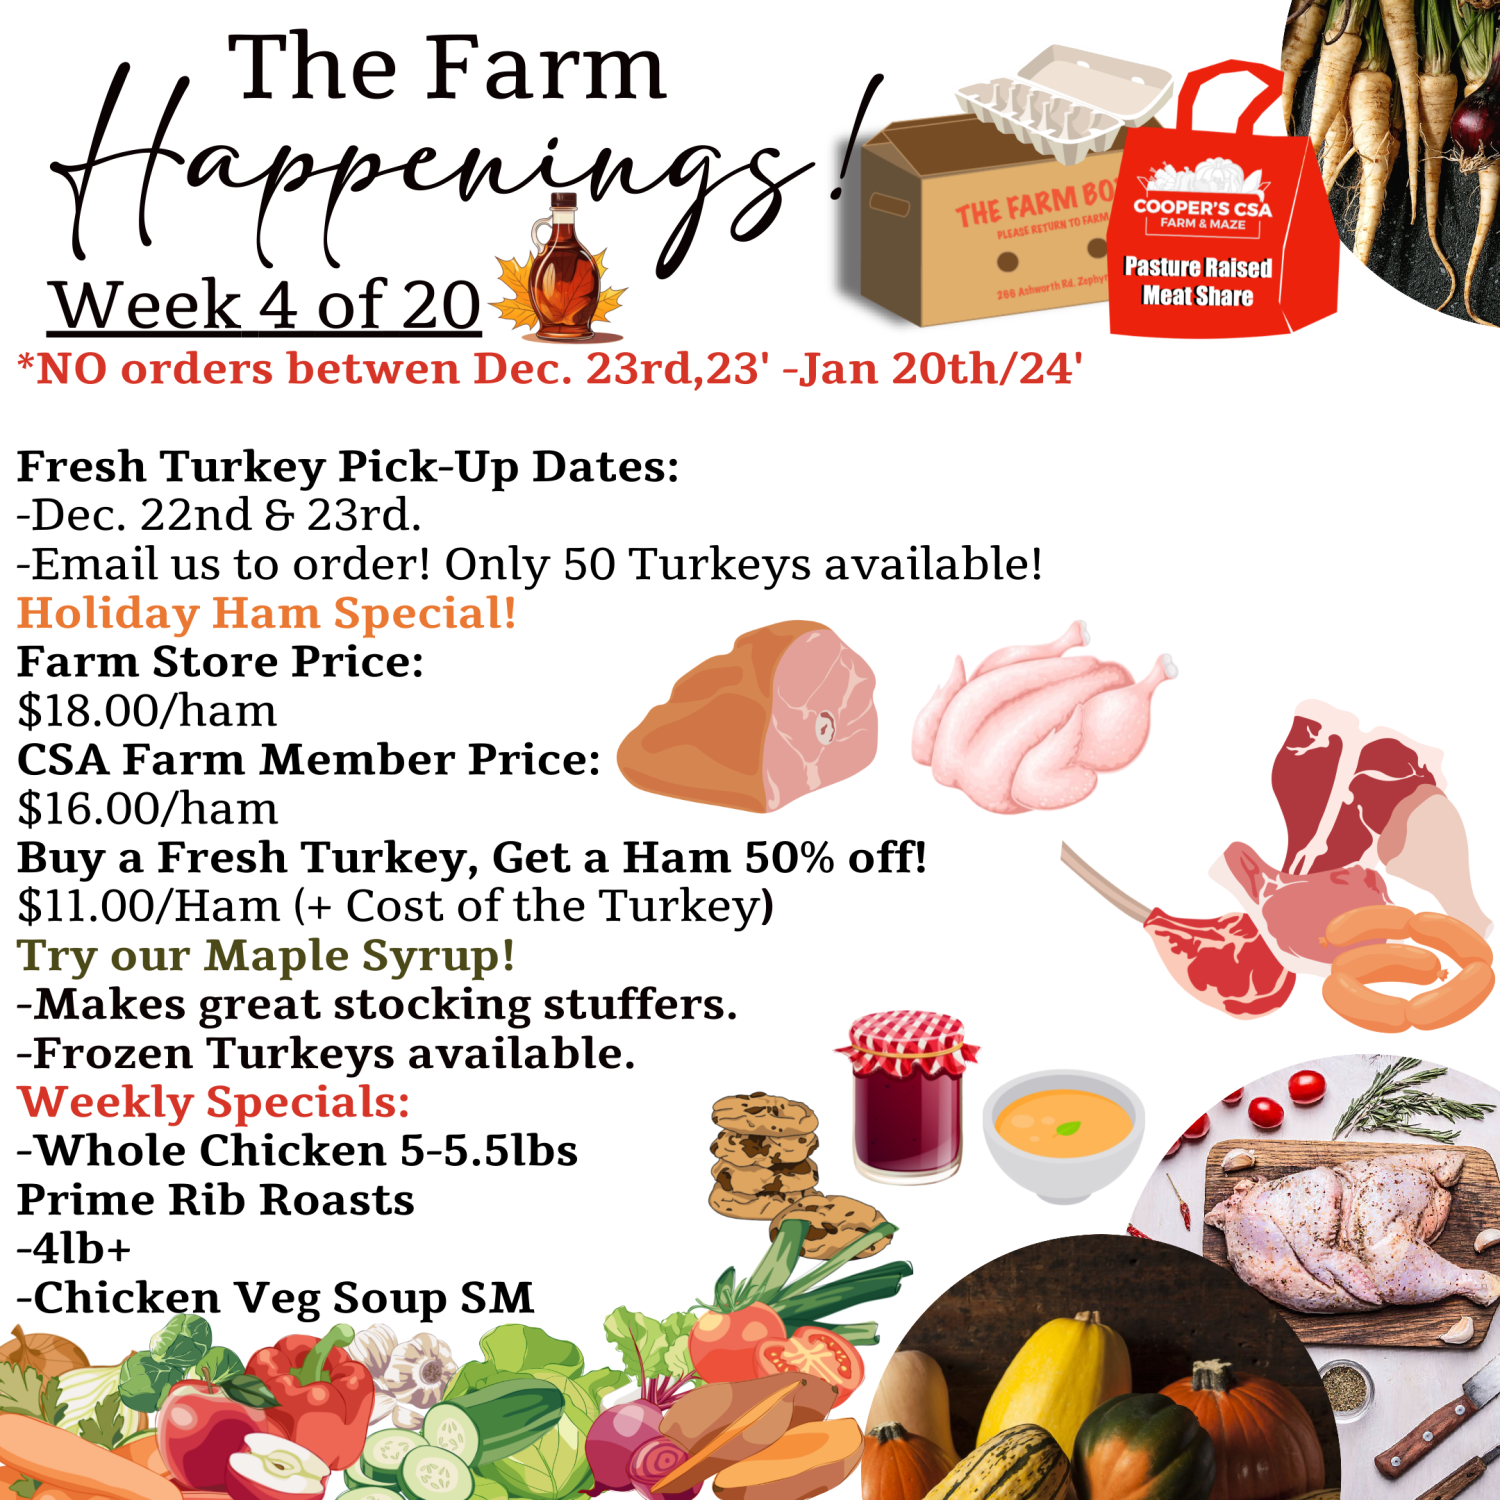 "The Farm Box"-Coopers CSA Farm Farm Happenings Dec. 5-9th